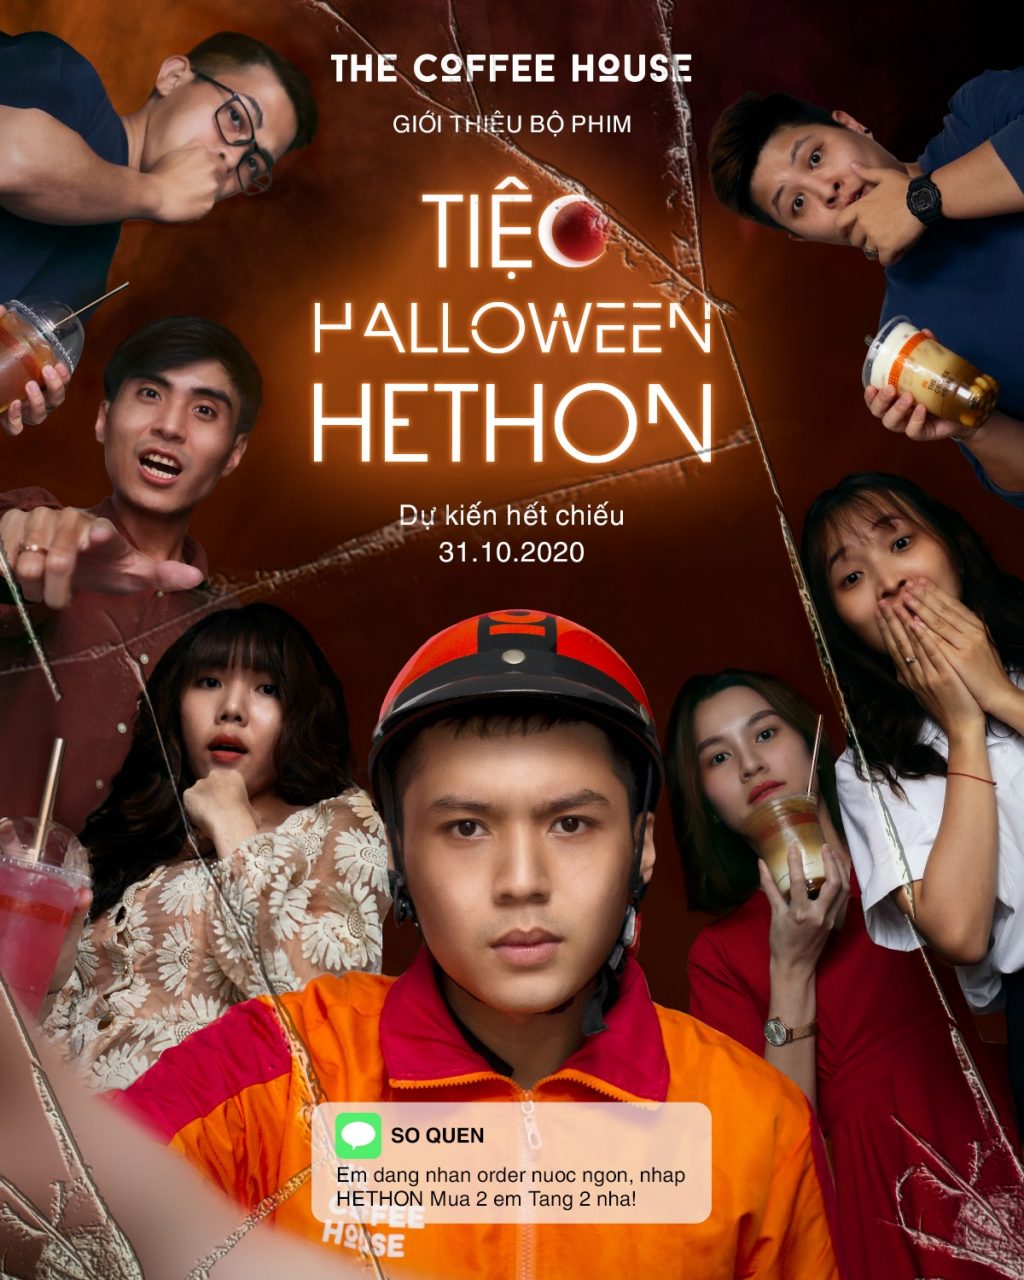 The Coffee House - Tiệc Halloween Hethon